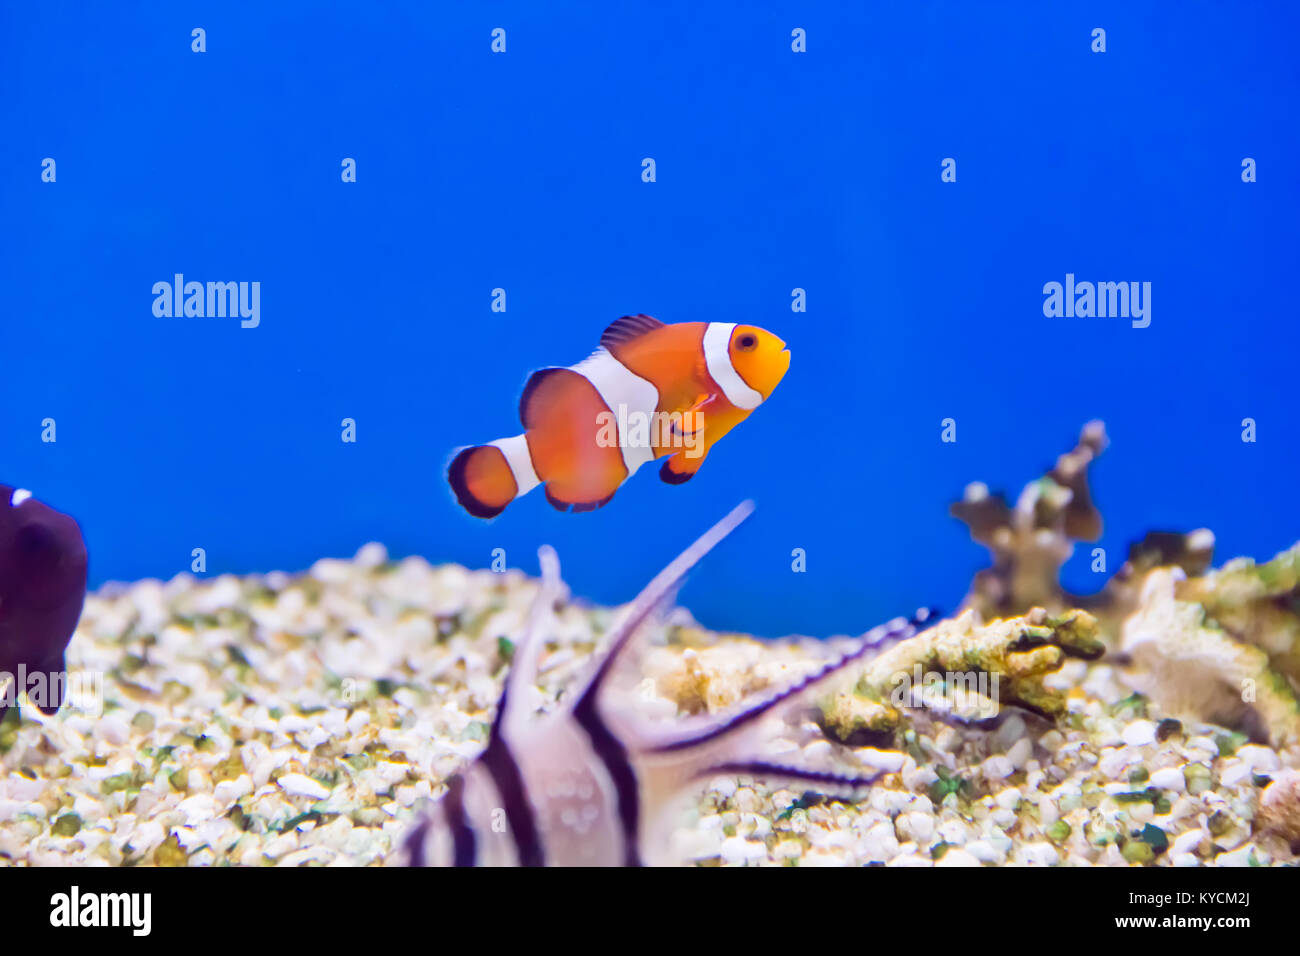 Photo of clown fish in aquarium water Stock Photo